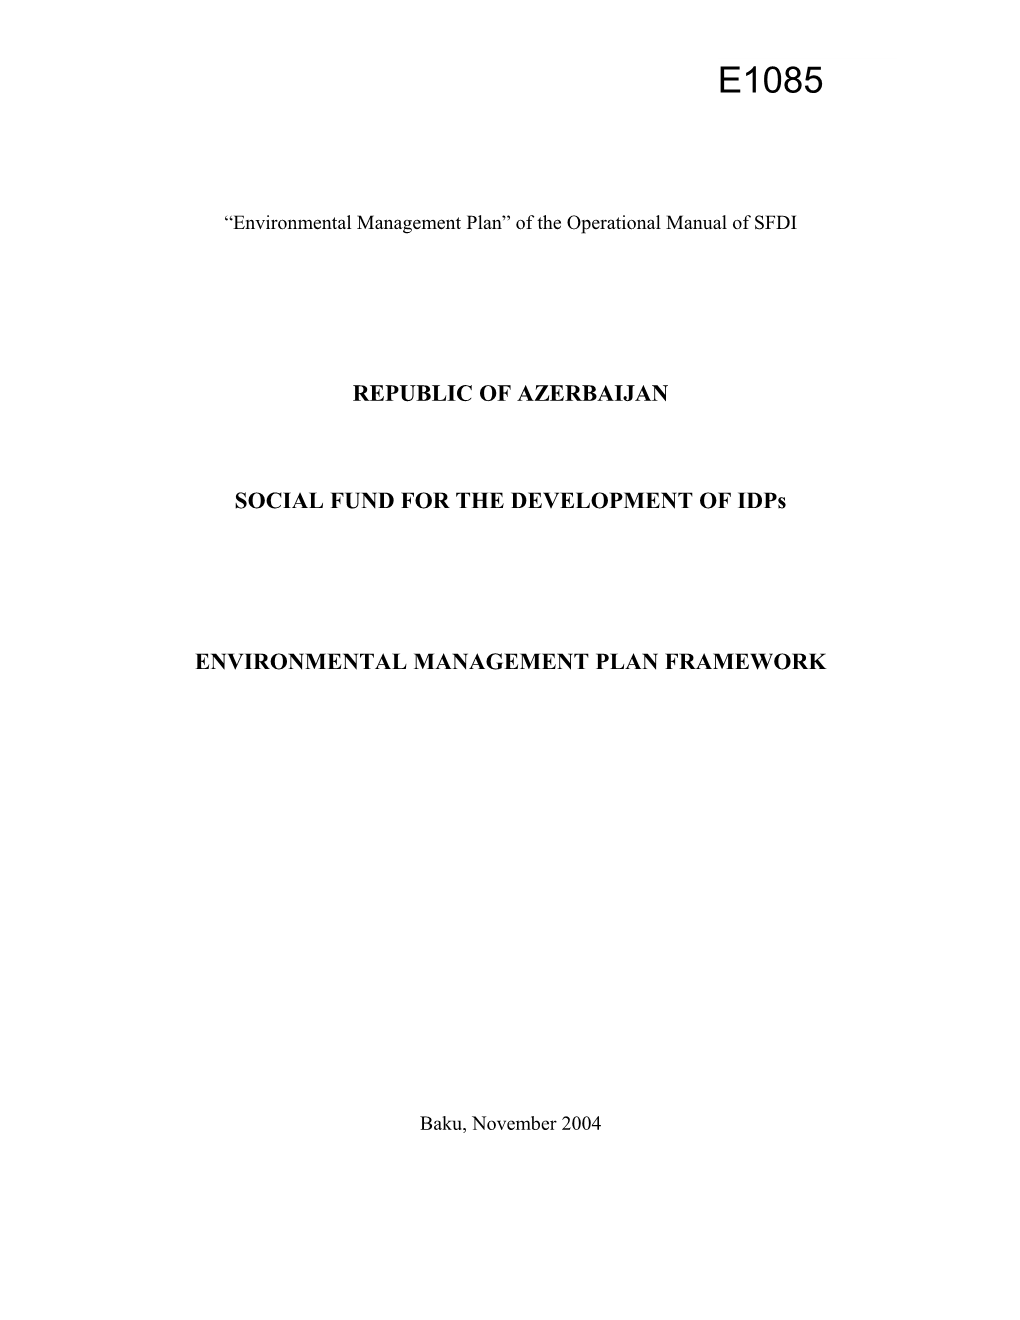 Environmental Management Plan of the Operational Manual of SFDI